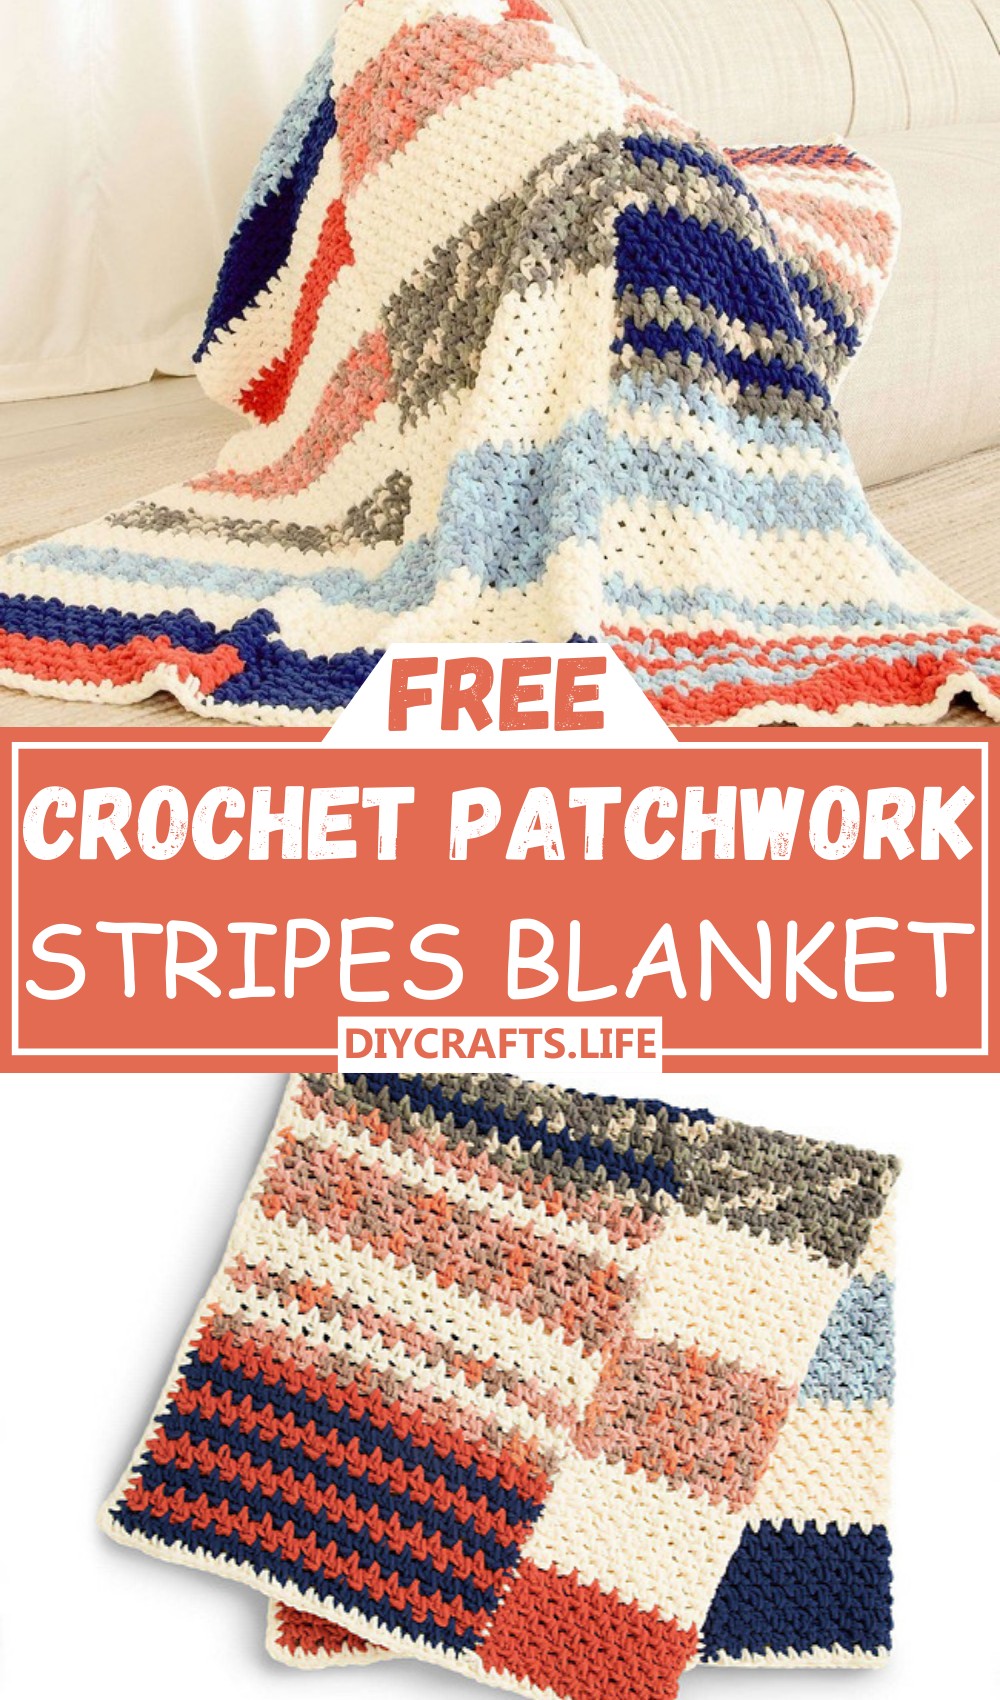 Crochet Patchwork Stripes Blanket